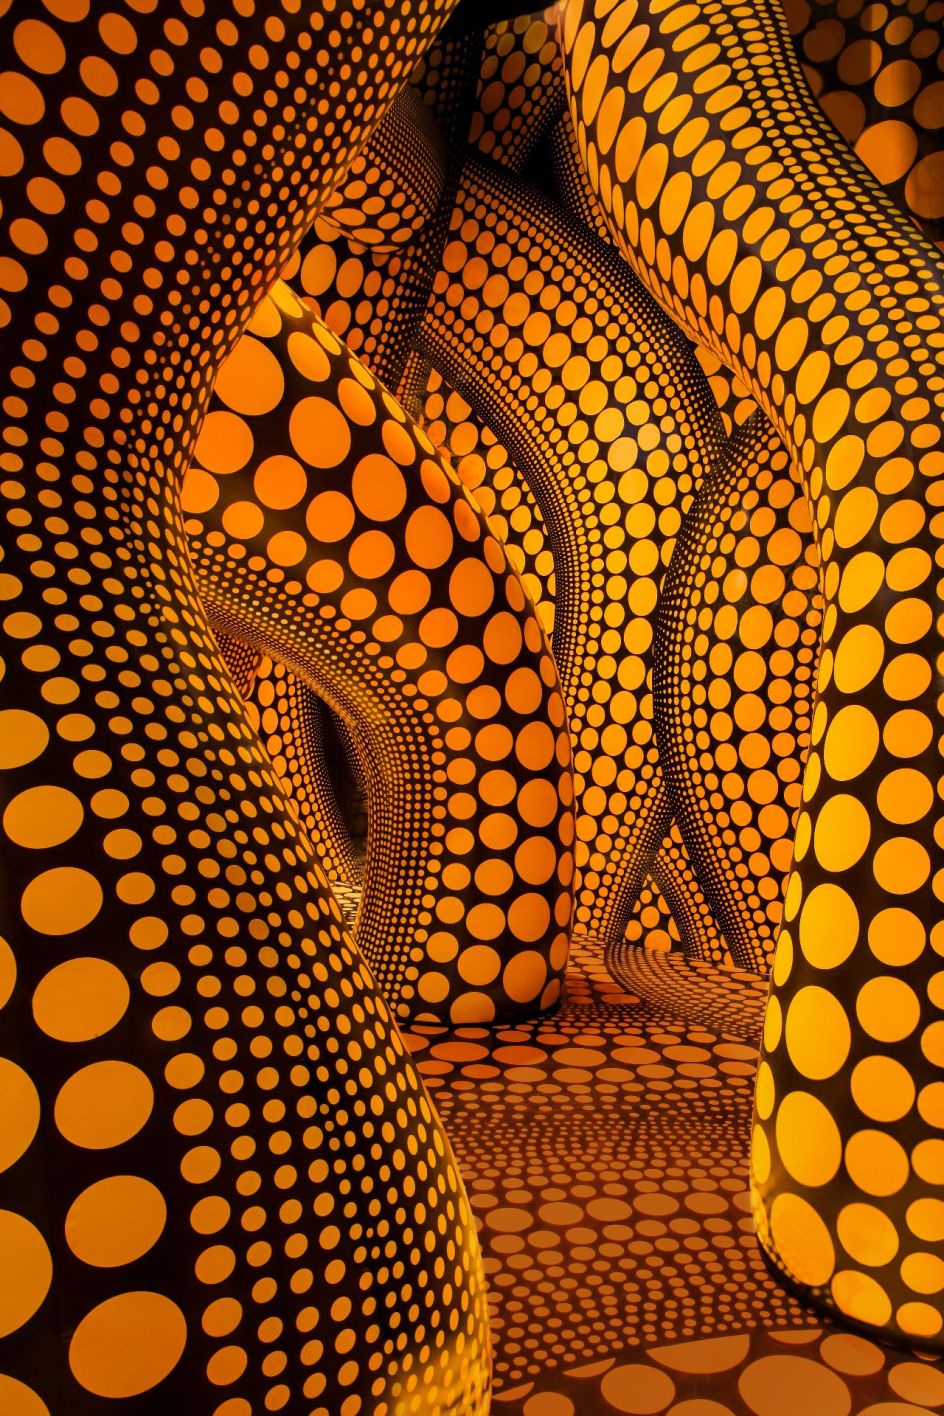 Yayoi Kusama, The Hope of the Polka Dots Buried in Infinity will Eternally Cover the Universe, 2019. Installation view, Fosun Foundation, Shanghai. Courtesy of Ota Fine Arts and Victoria Miro © YAYOI KUSAMA